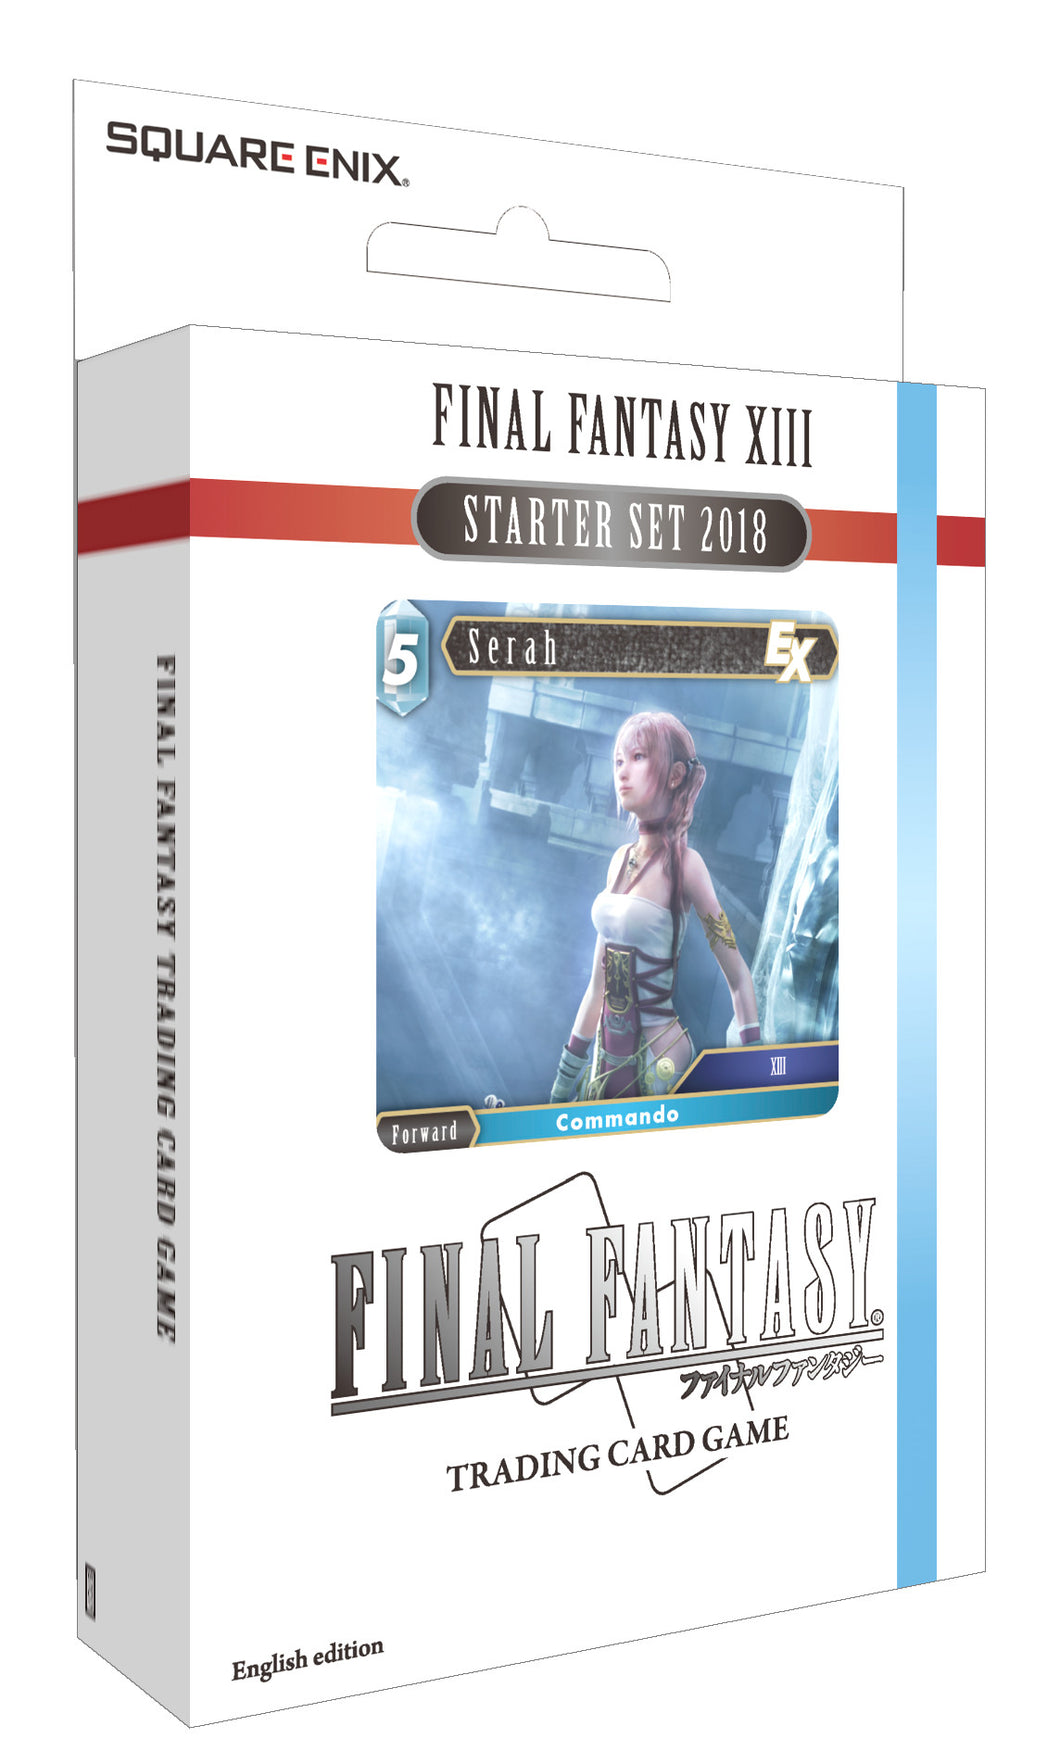 Final Fantasy Trading Card Game Starter Set Final Fantasy XIII (2018) (single unit)